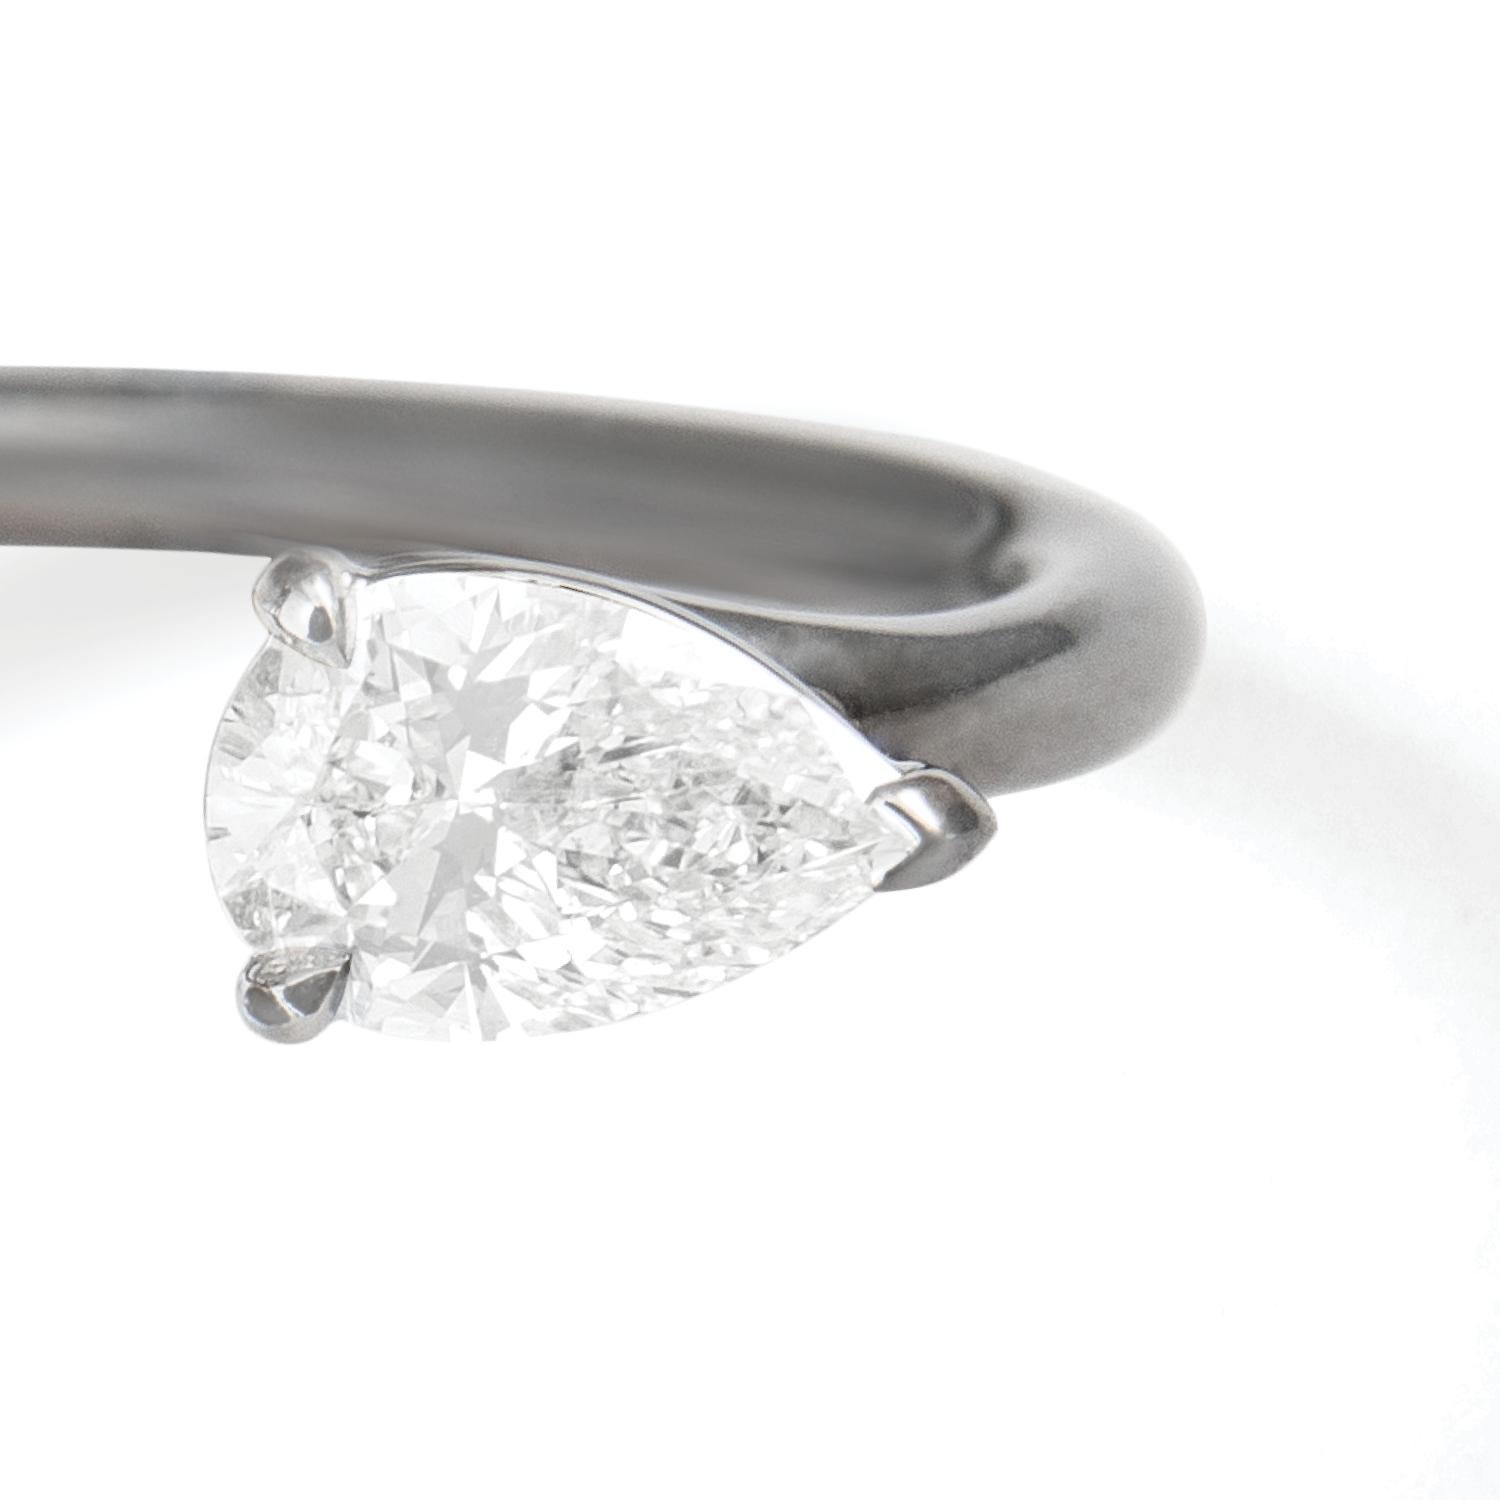 For Sale:  Monique Péan White Diamond and Sikhote-Alin Meteorite Specimen Ring 3